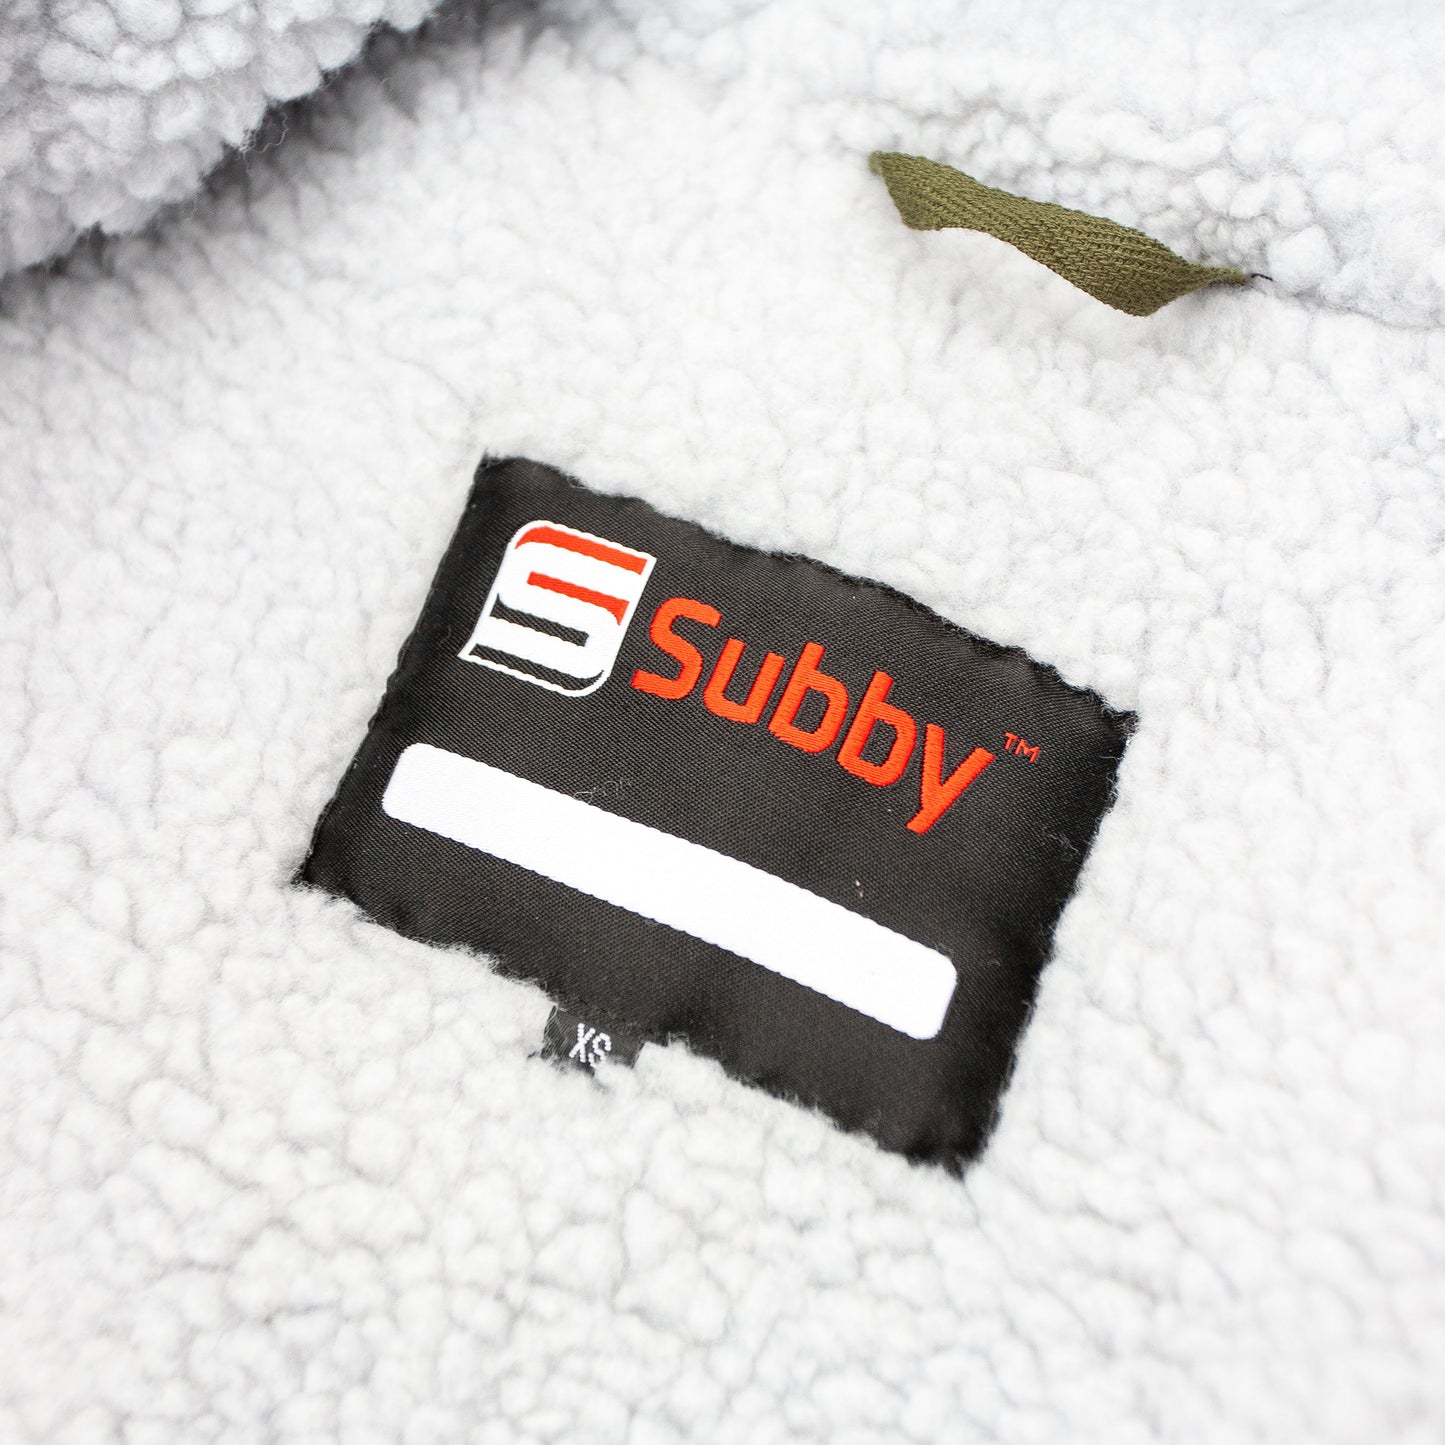 Subby Dry change robe - Olive Green / Grey sherpa fleece lining -